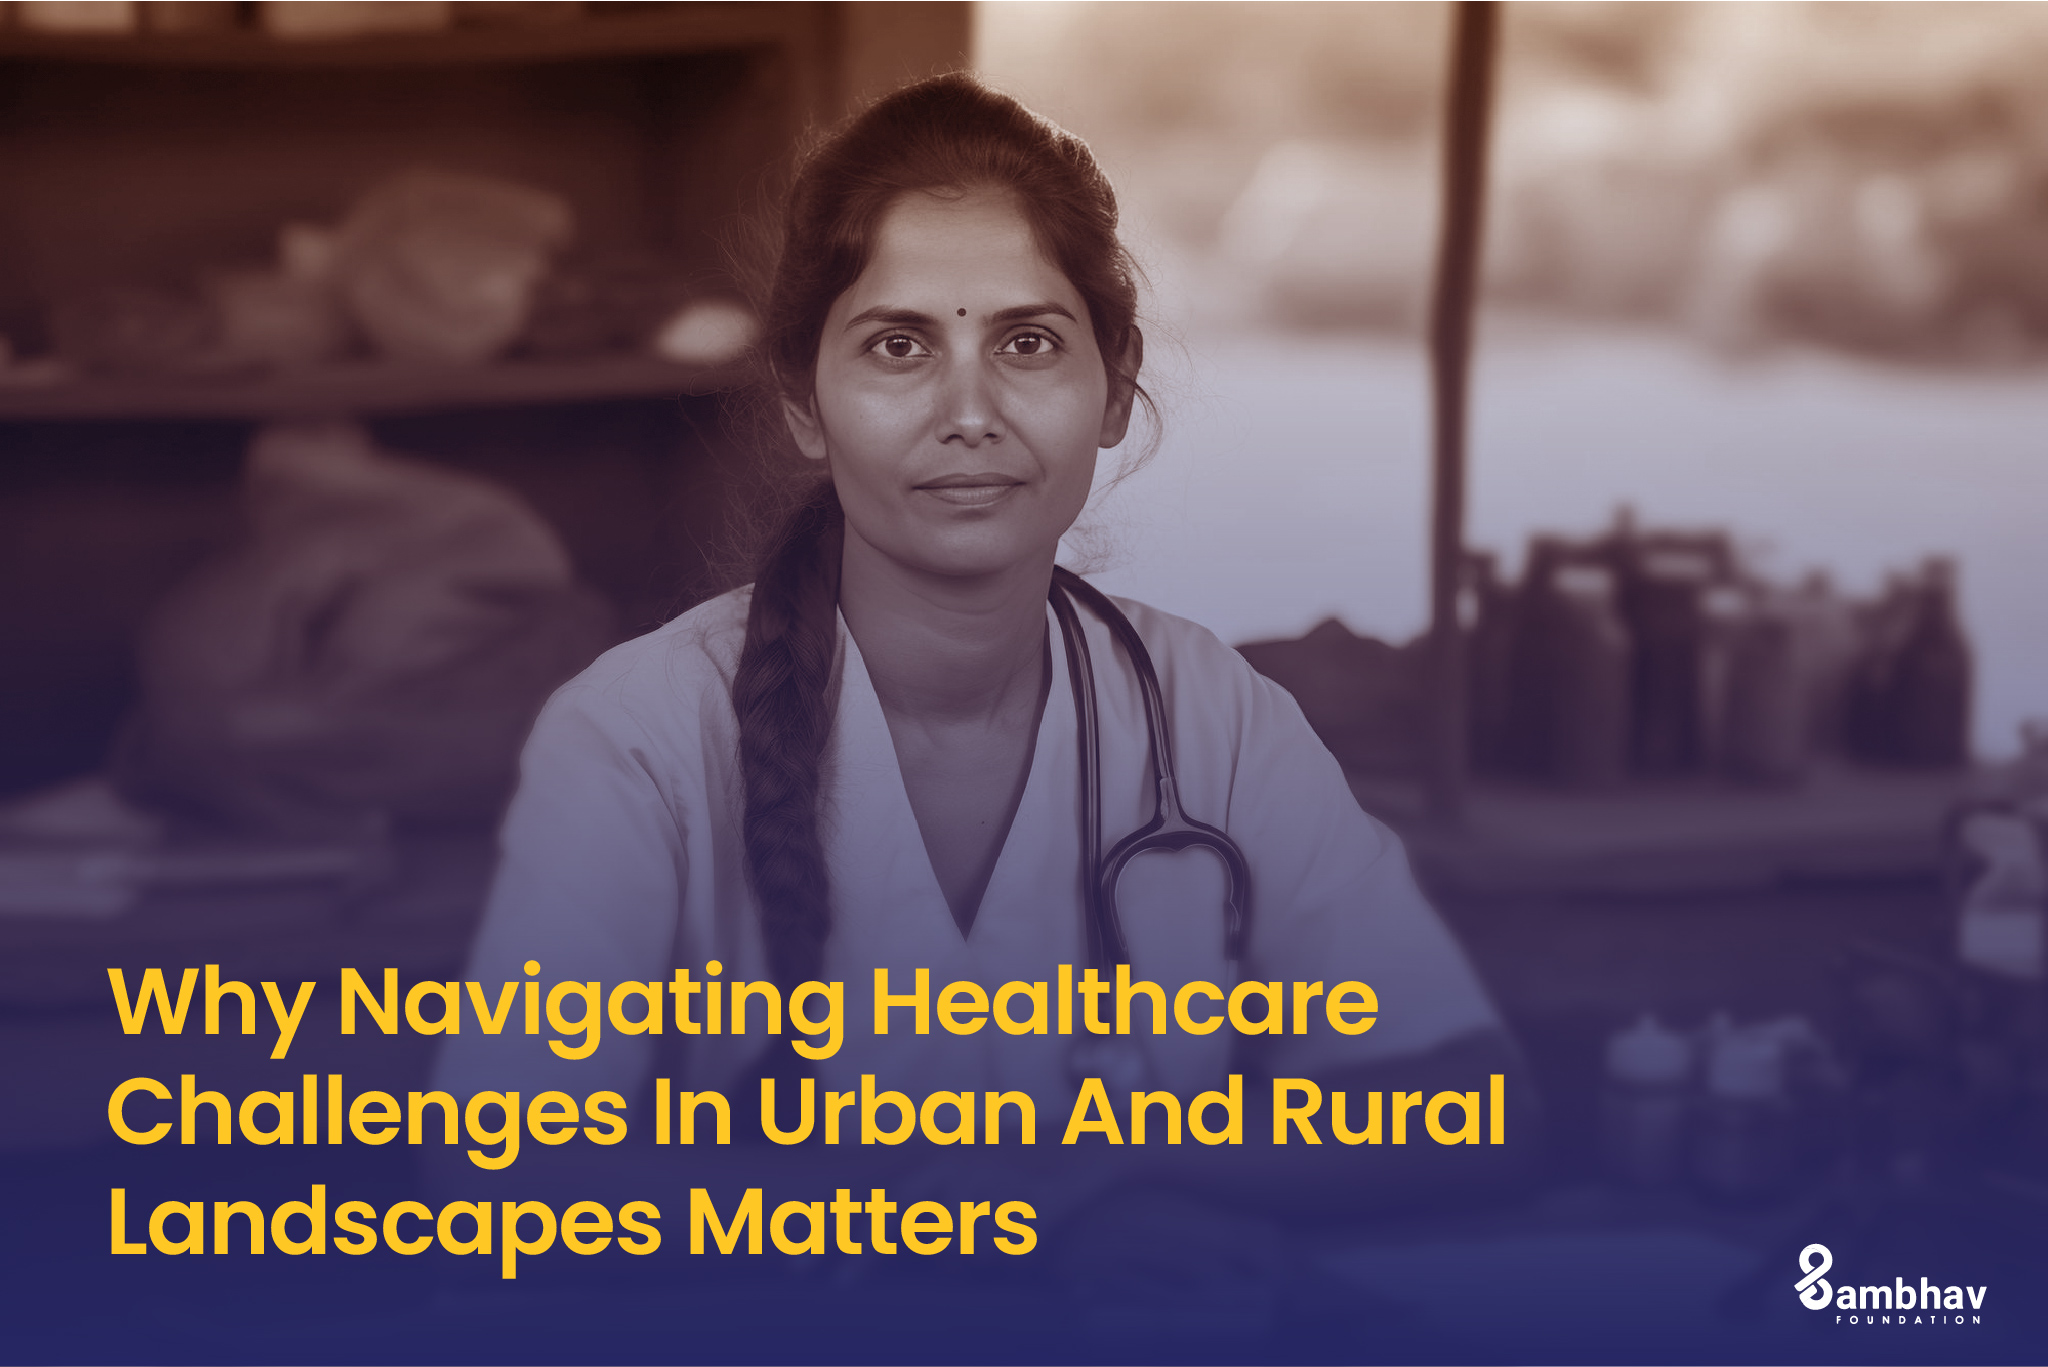 Navigating Healthcare Challenges in Urban and Rural Landscapes